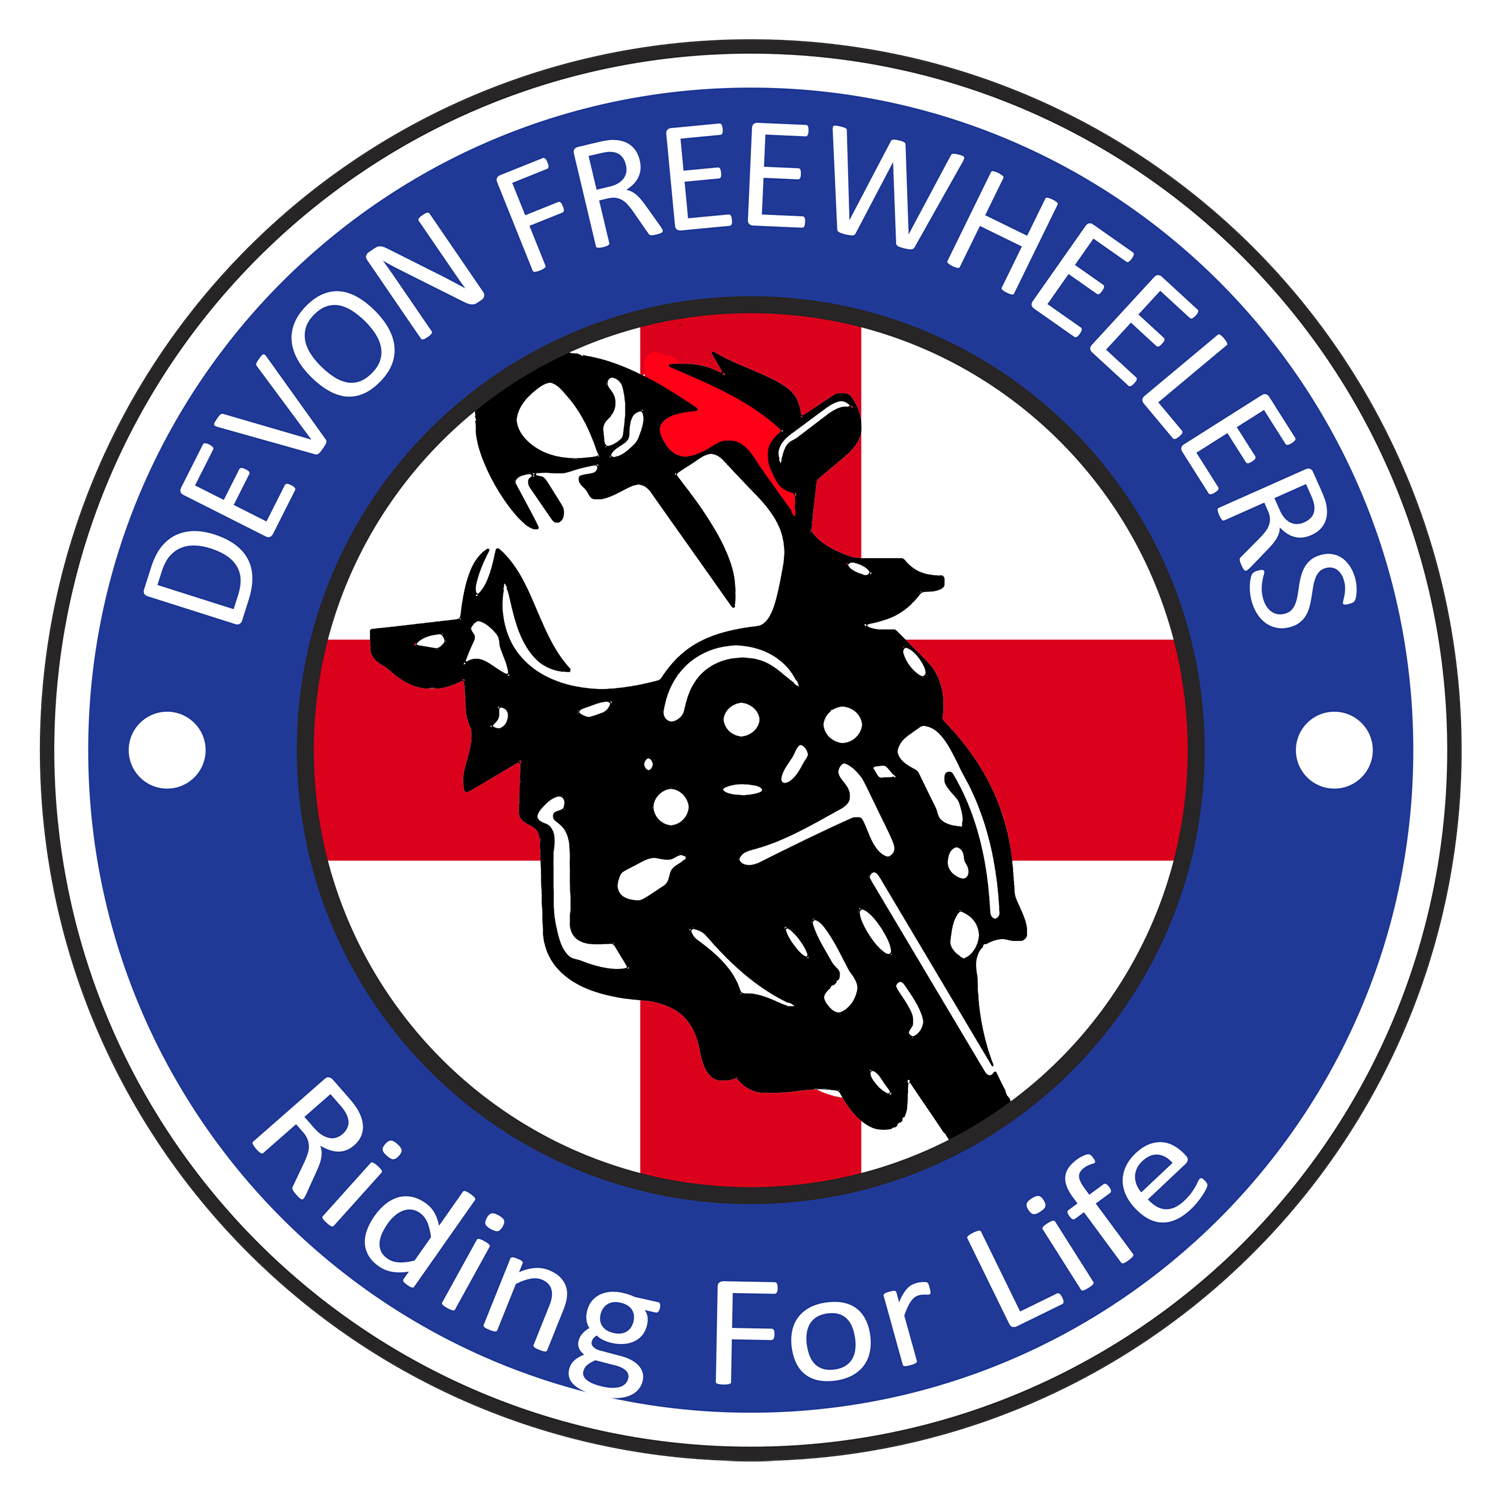 Devon Freewheelers is St Bridget Nurseries Charity for 2019